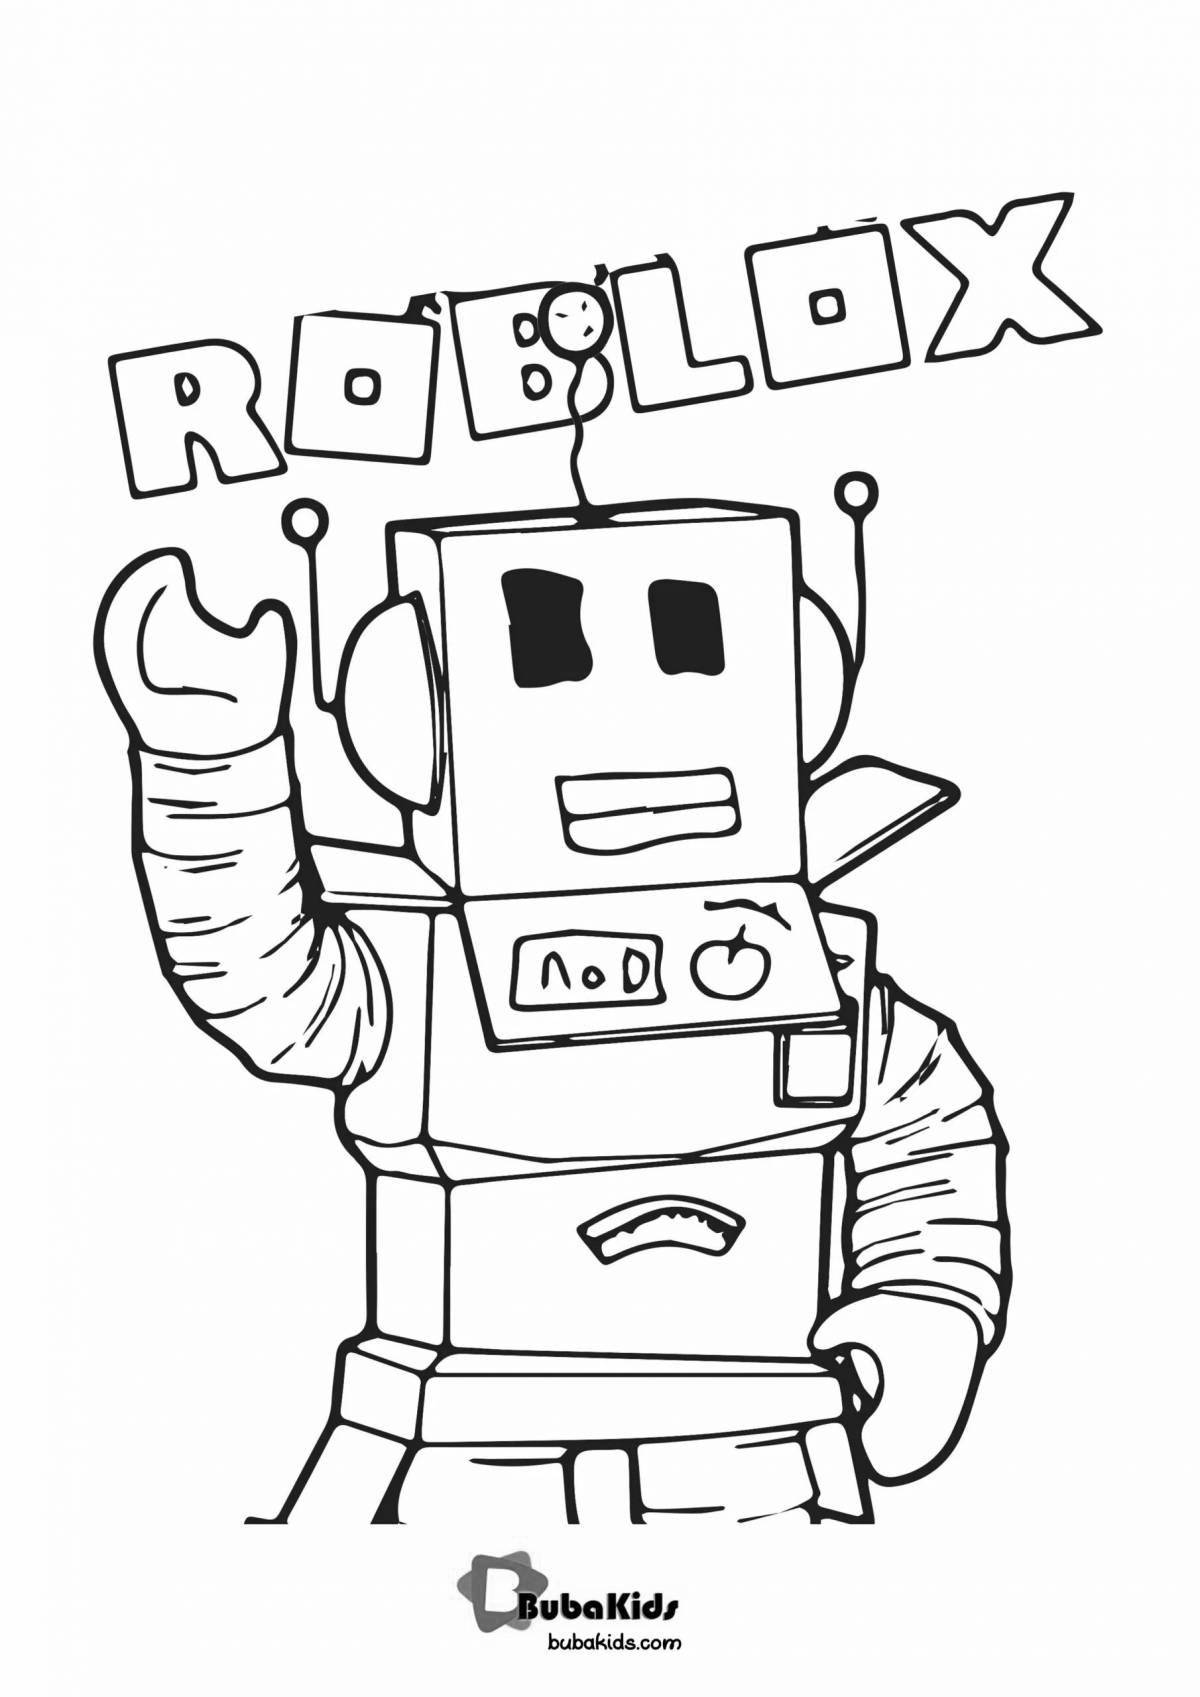 Fun roblox icon coloring page